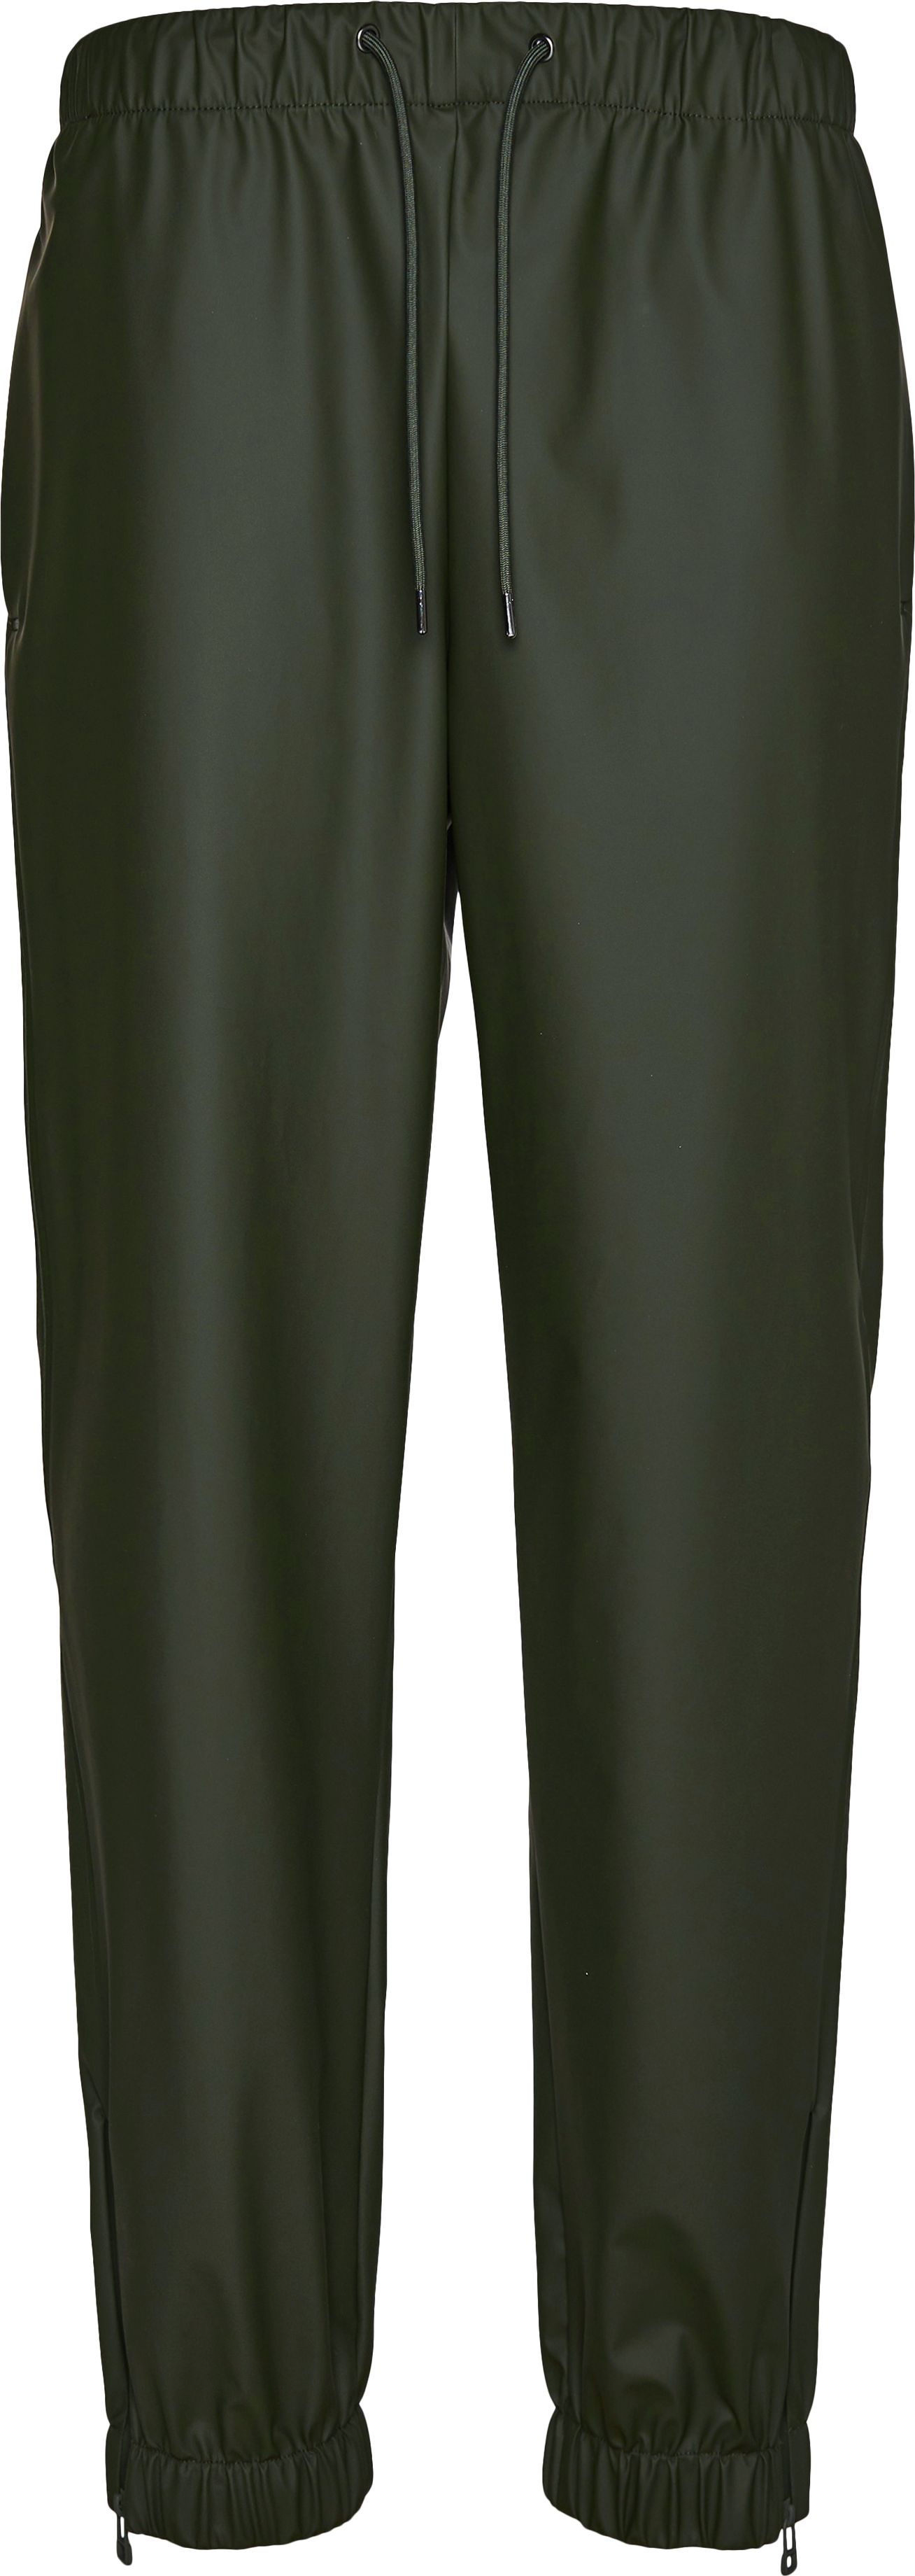 Unisex Pants Regular Green